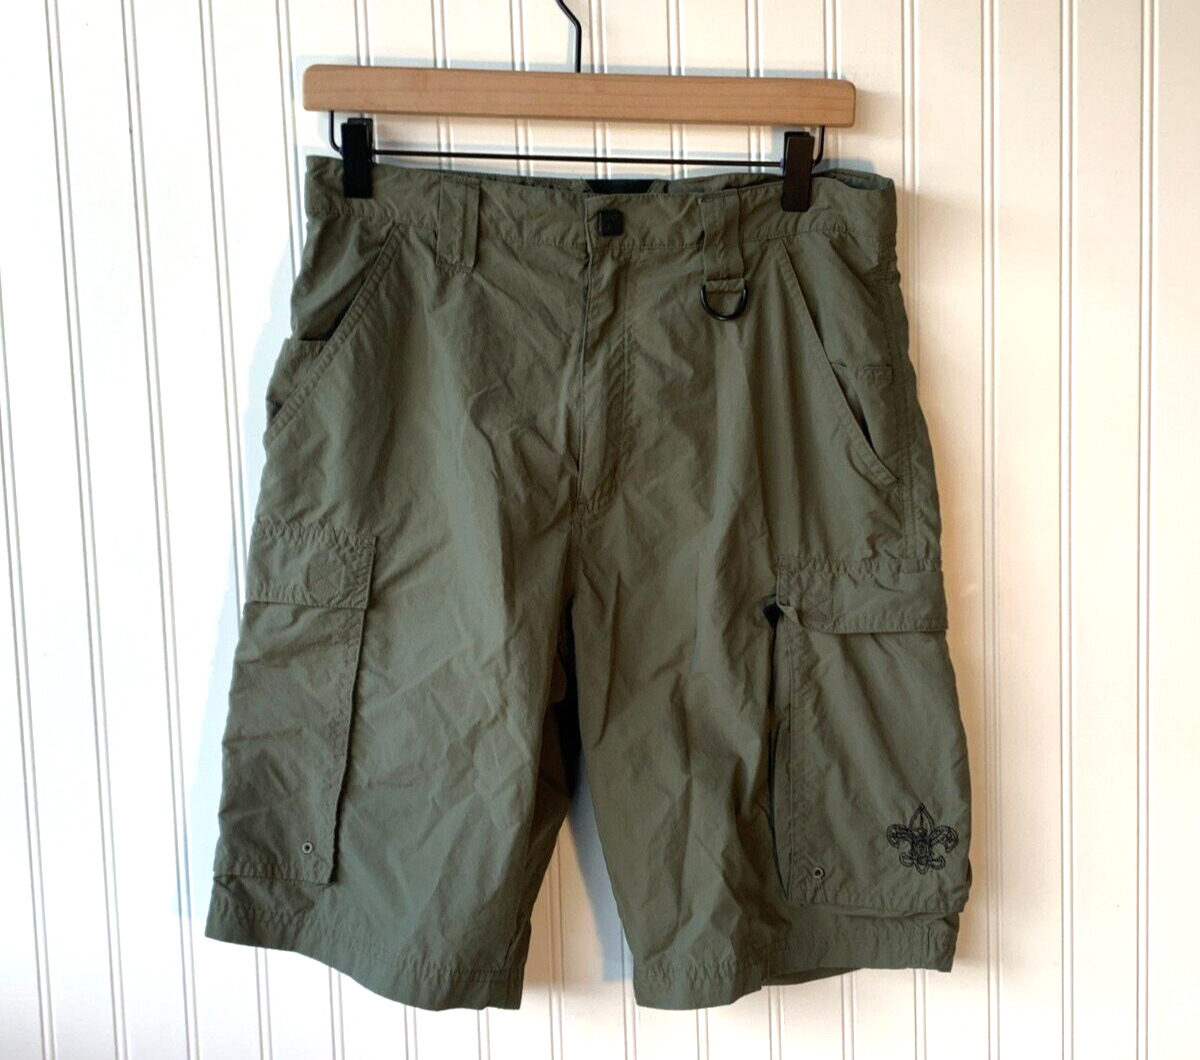 BSA Boy Scout Uniform Shorts Mens Small S Green Nylon